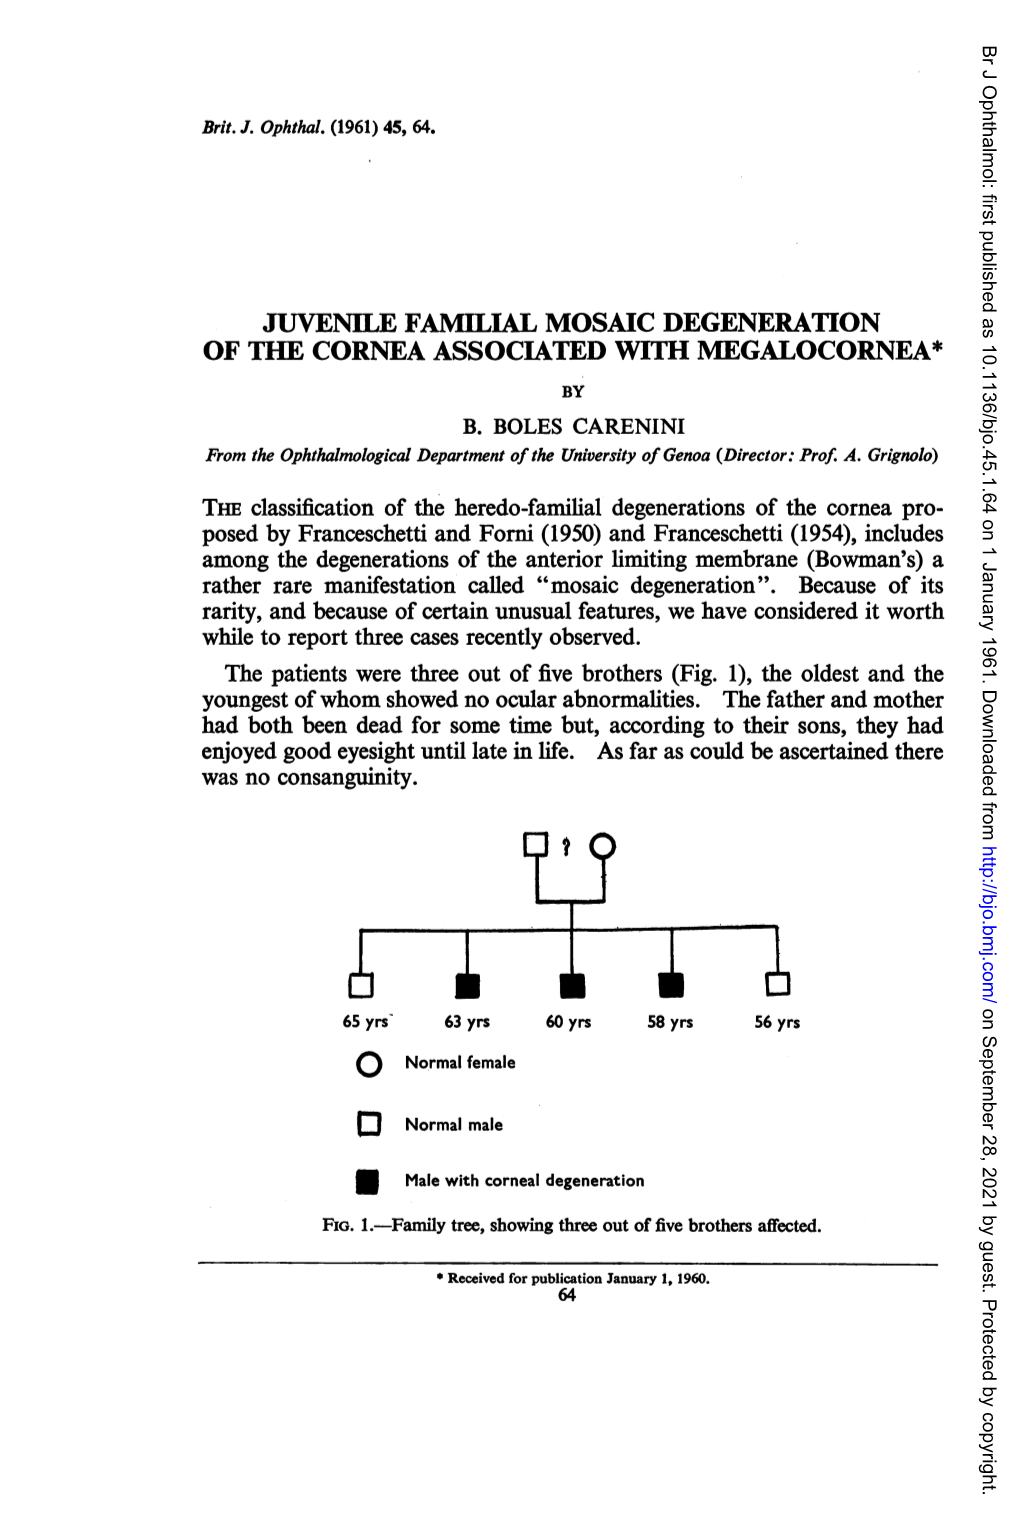 Juvenile Familial Mosaic Degeneration of Thie Cornea Associated with Megalocornea* by B